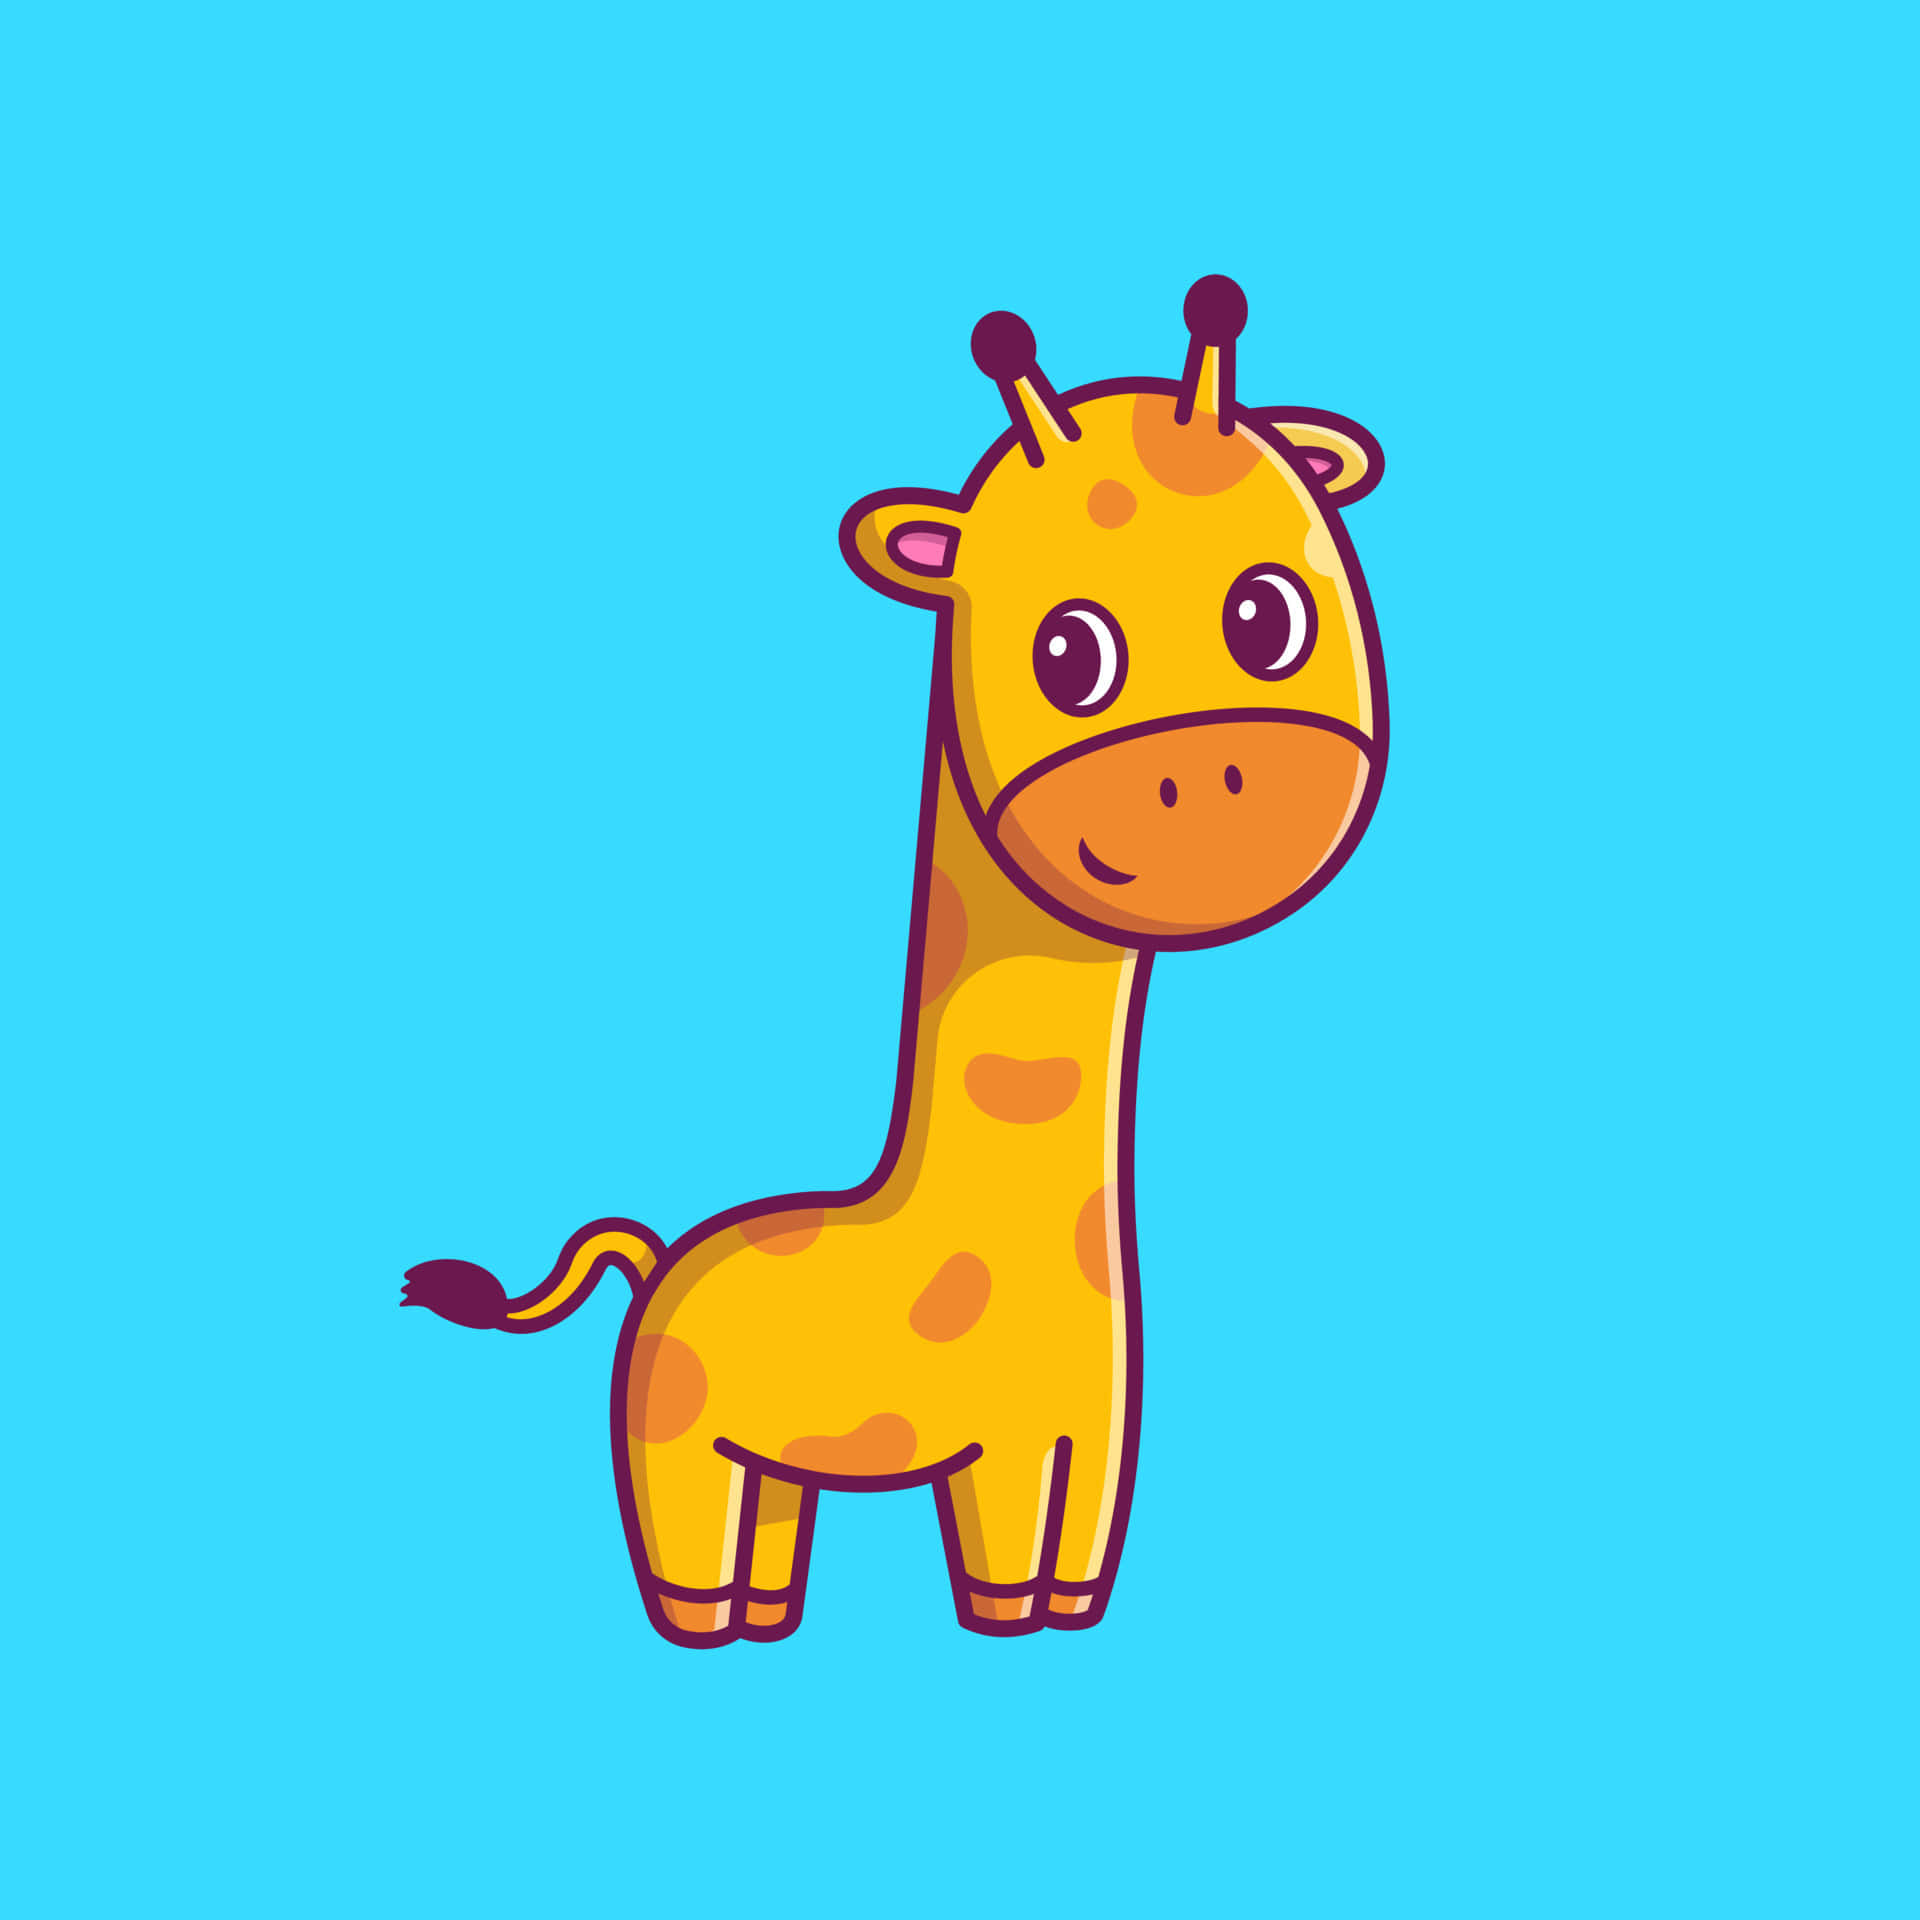 Cute Giraffe Smiling Cartoon On Blue Picture